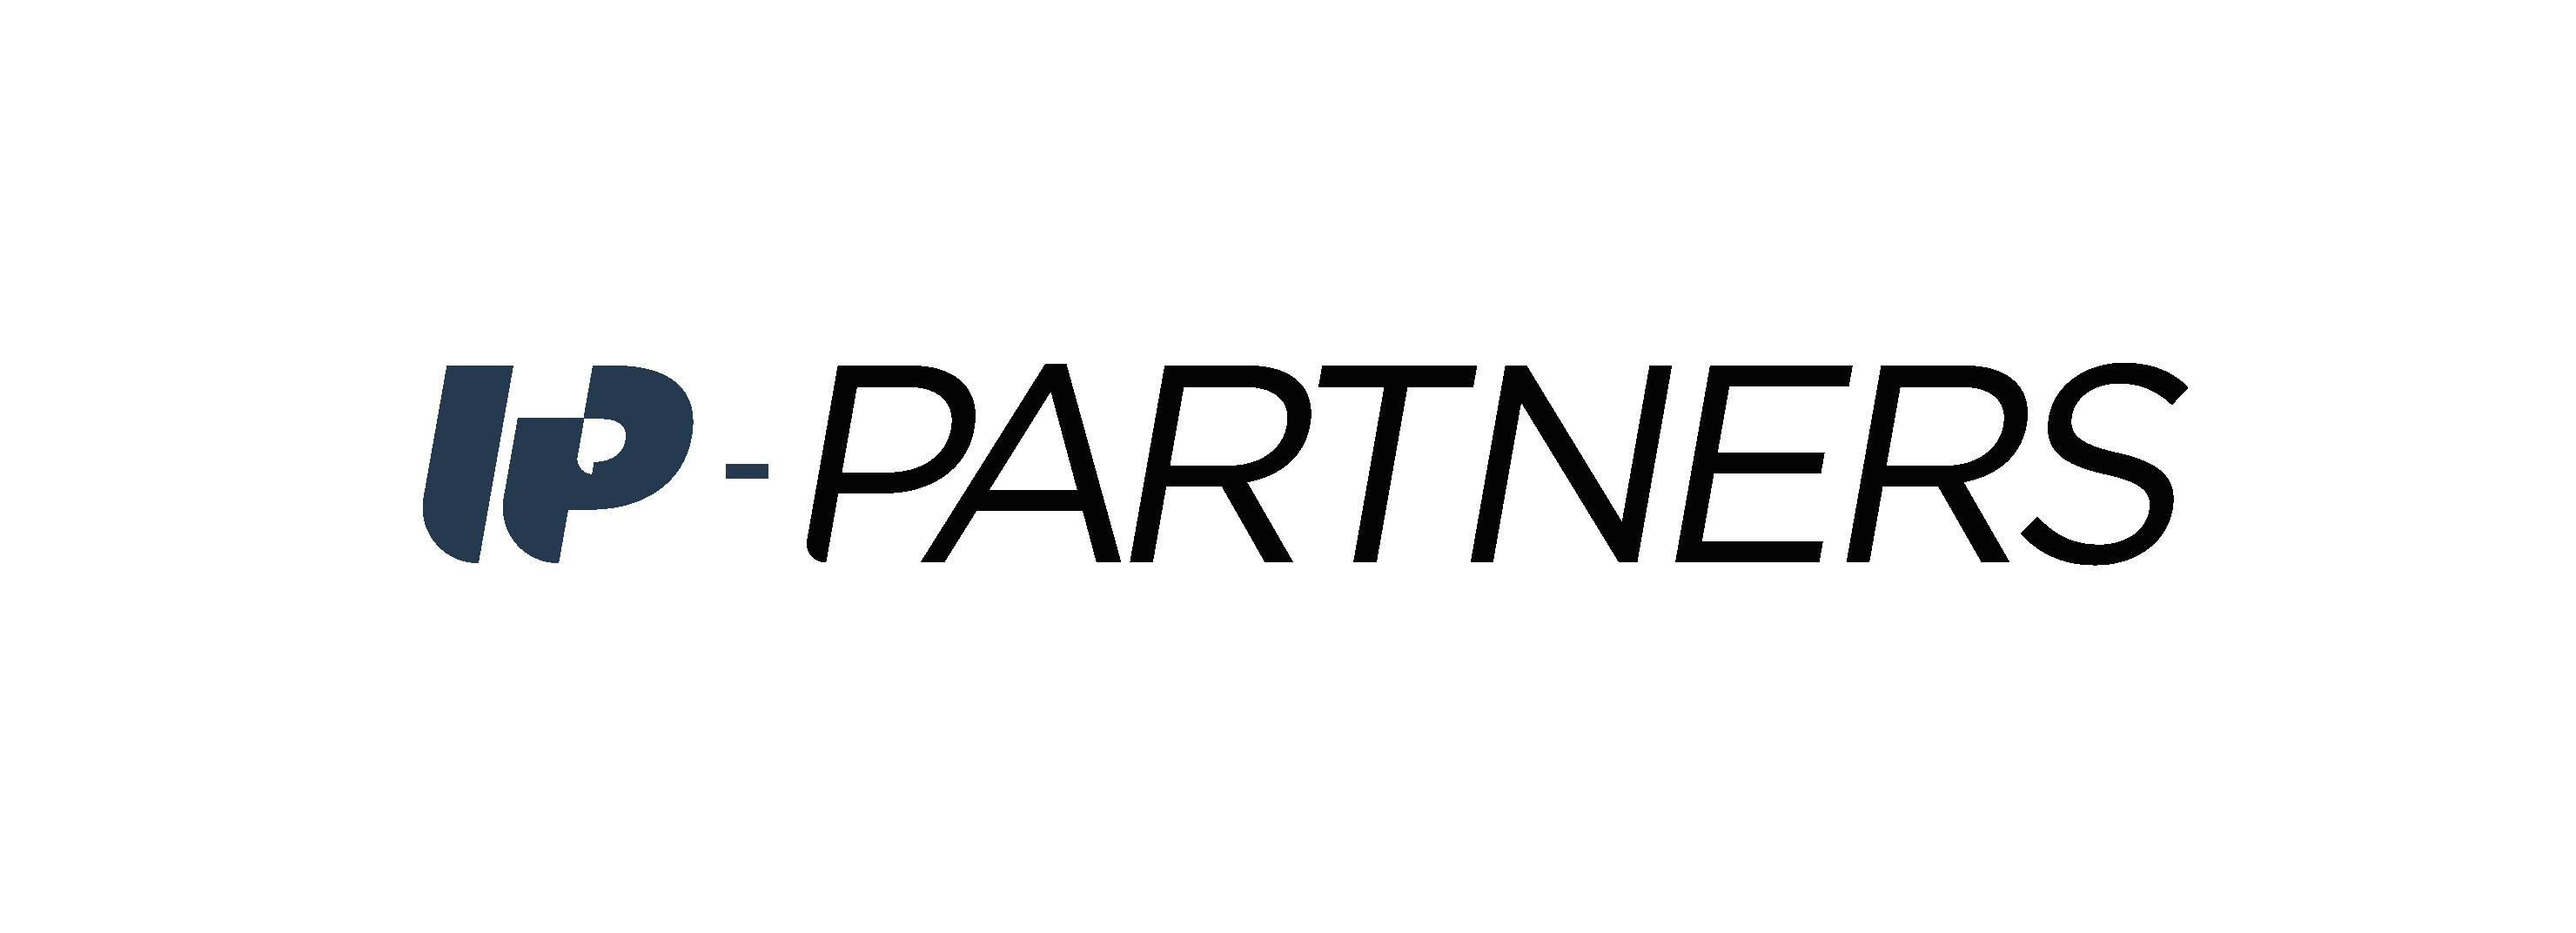 logo IP-Partners bleu et noir